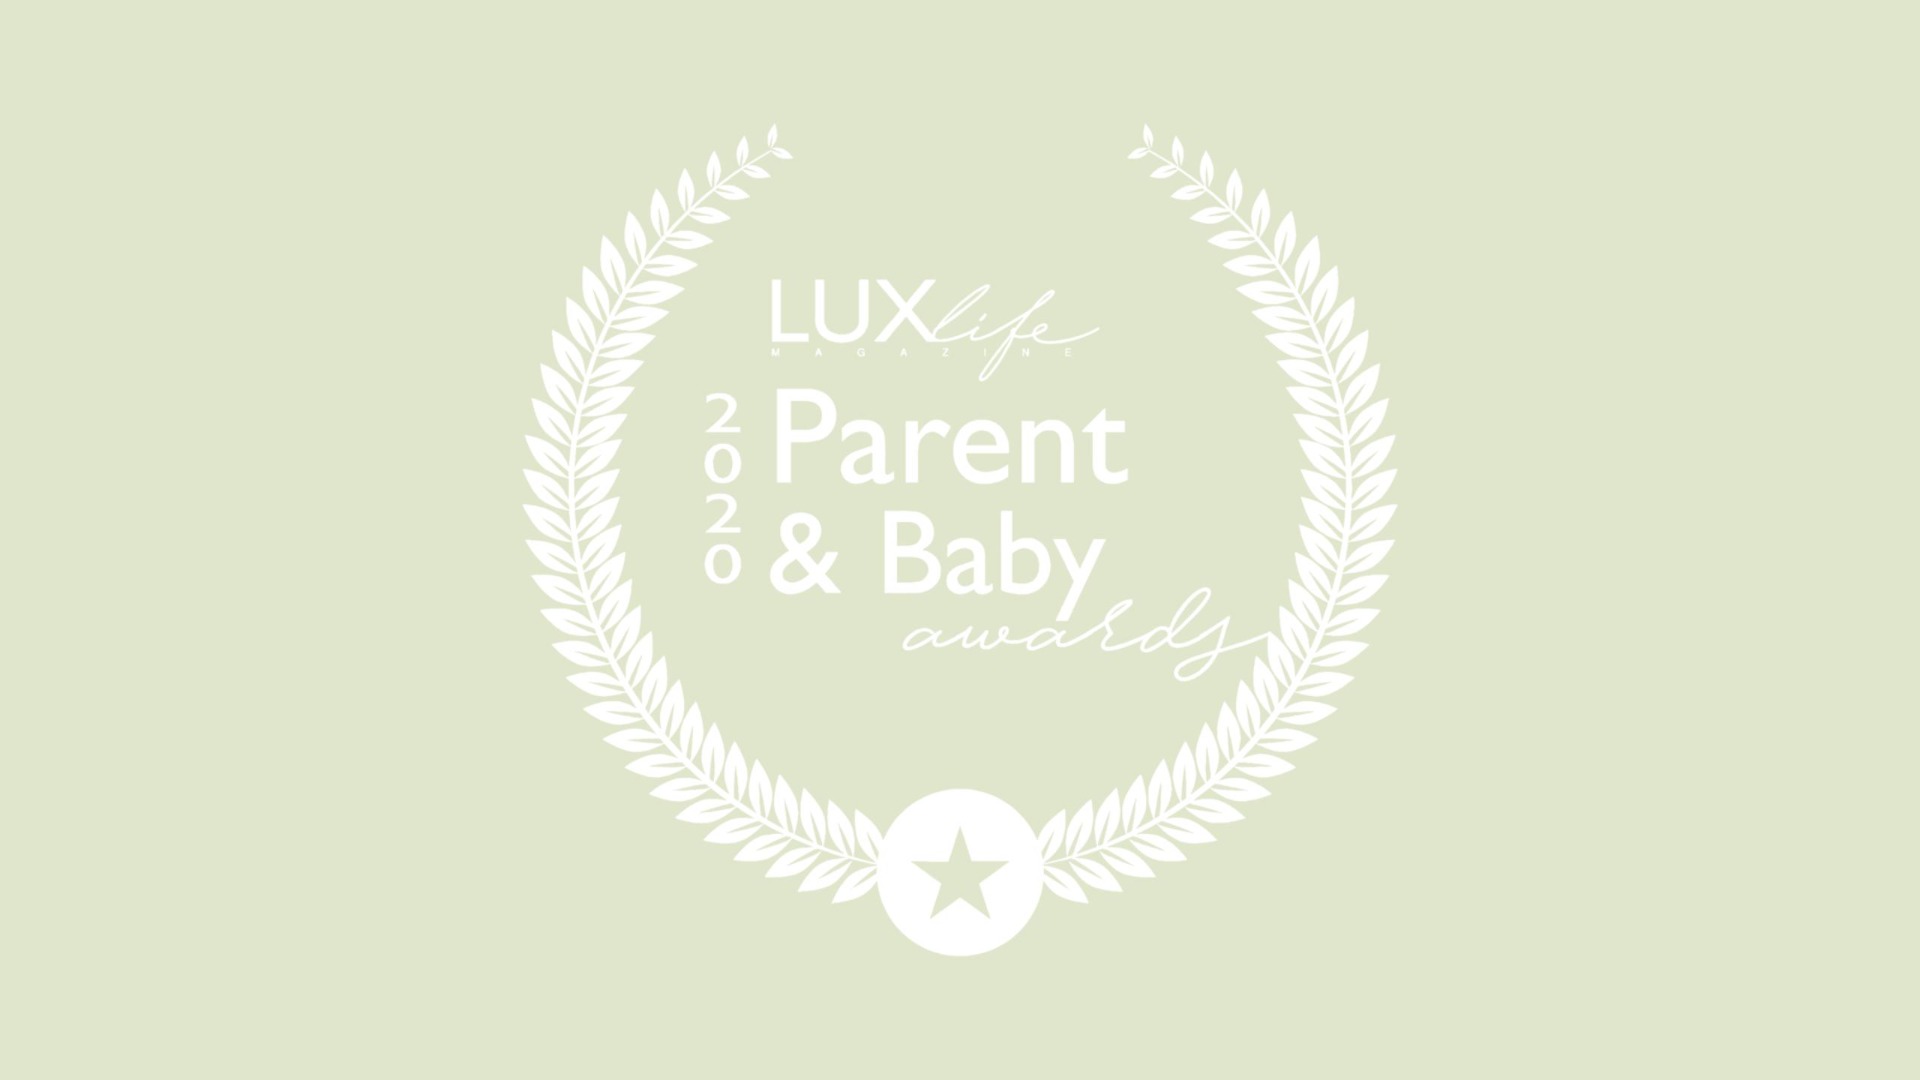 BORRN obtained An Award from LUXlife Parent & Baby Magazine